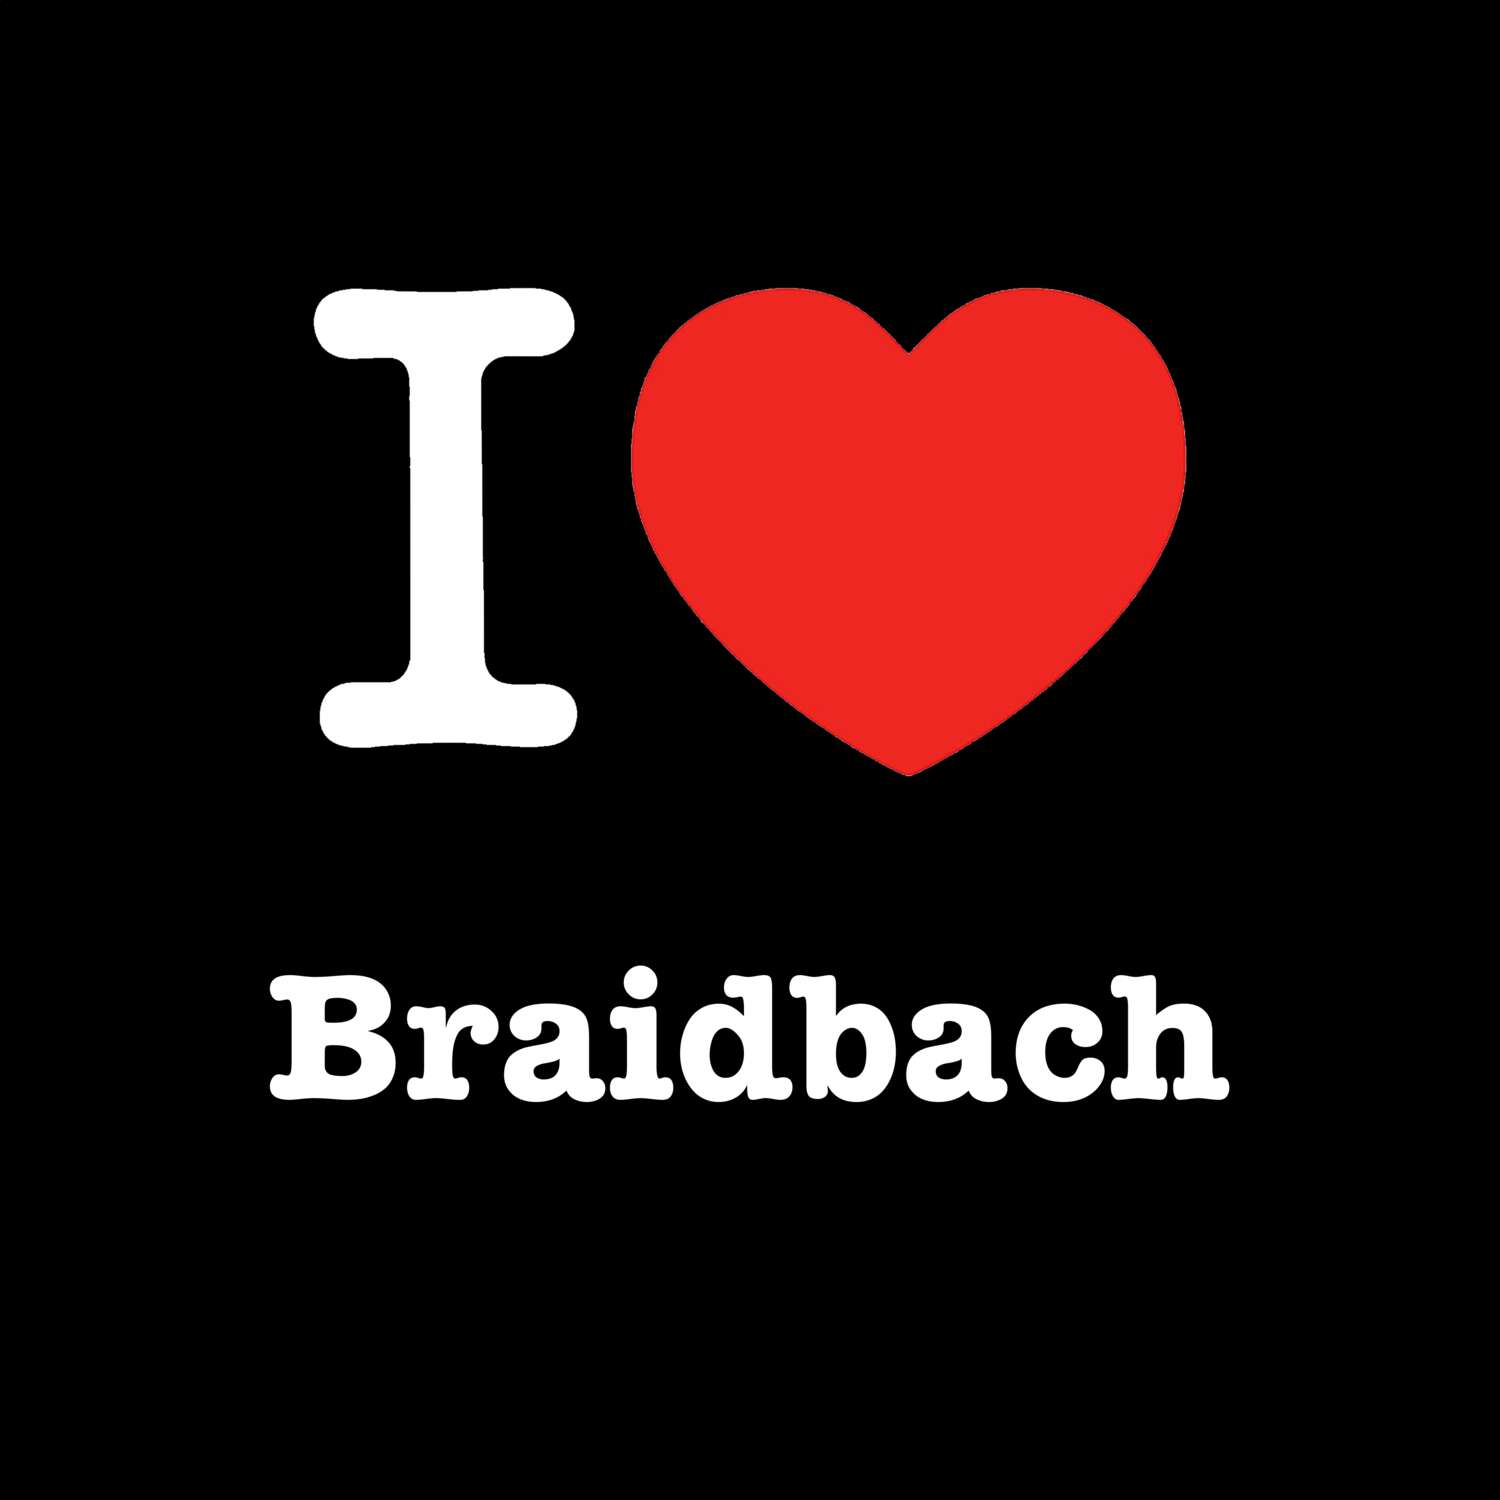 Braidbach T-Shirt »I love«